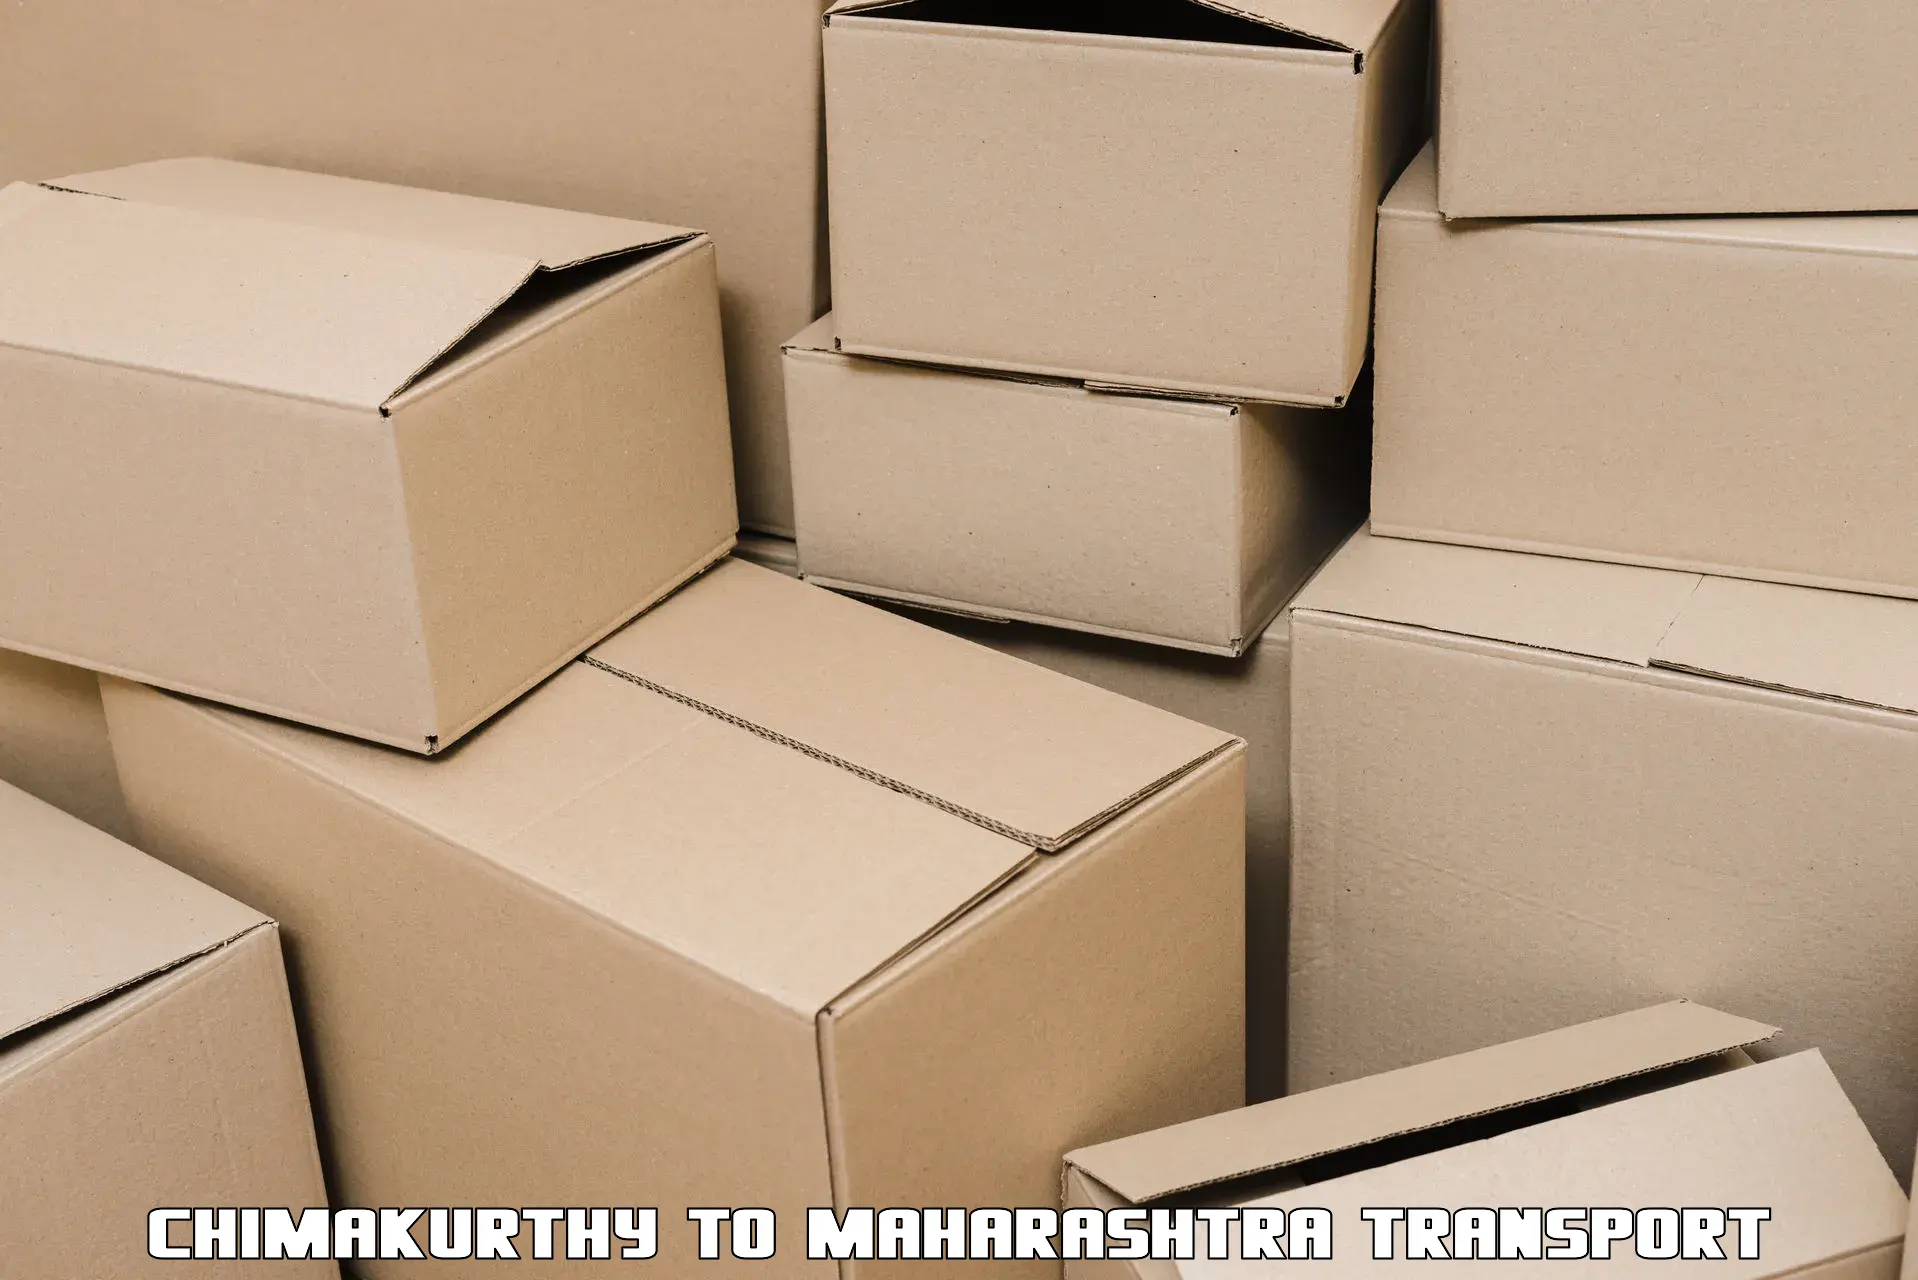 Shipping partner Chimakurthy to Dadar